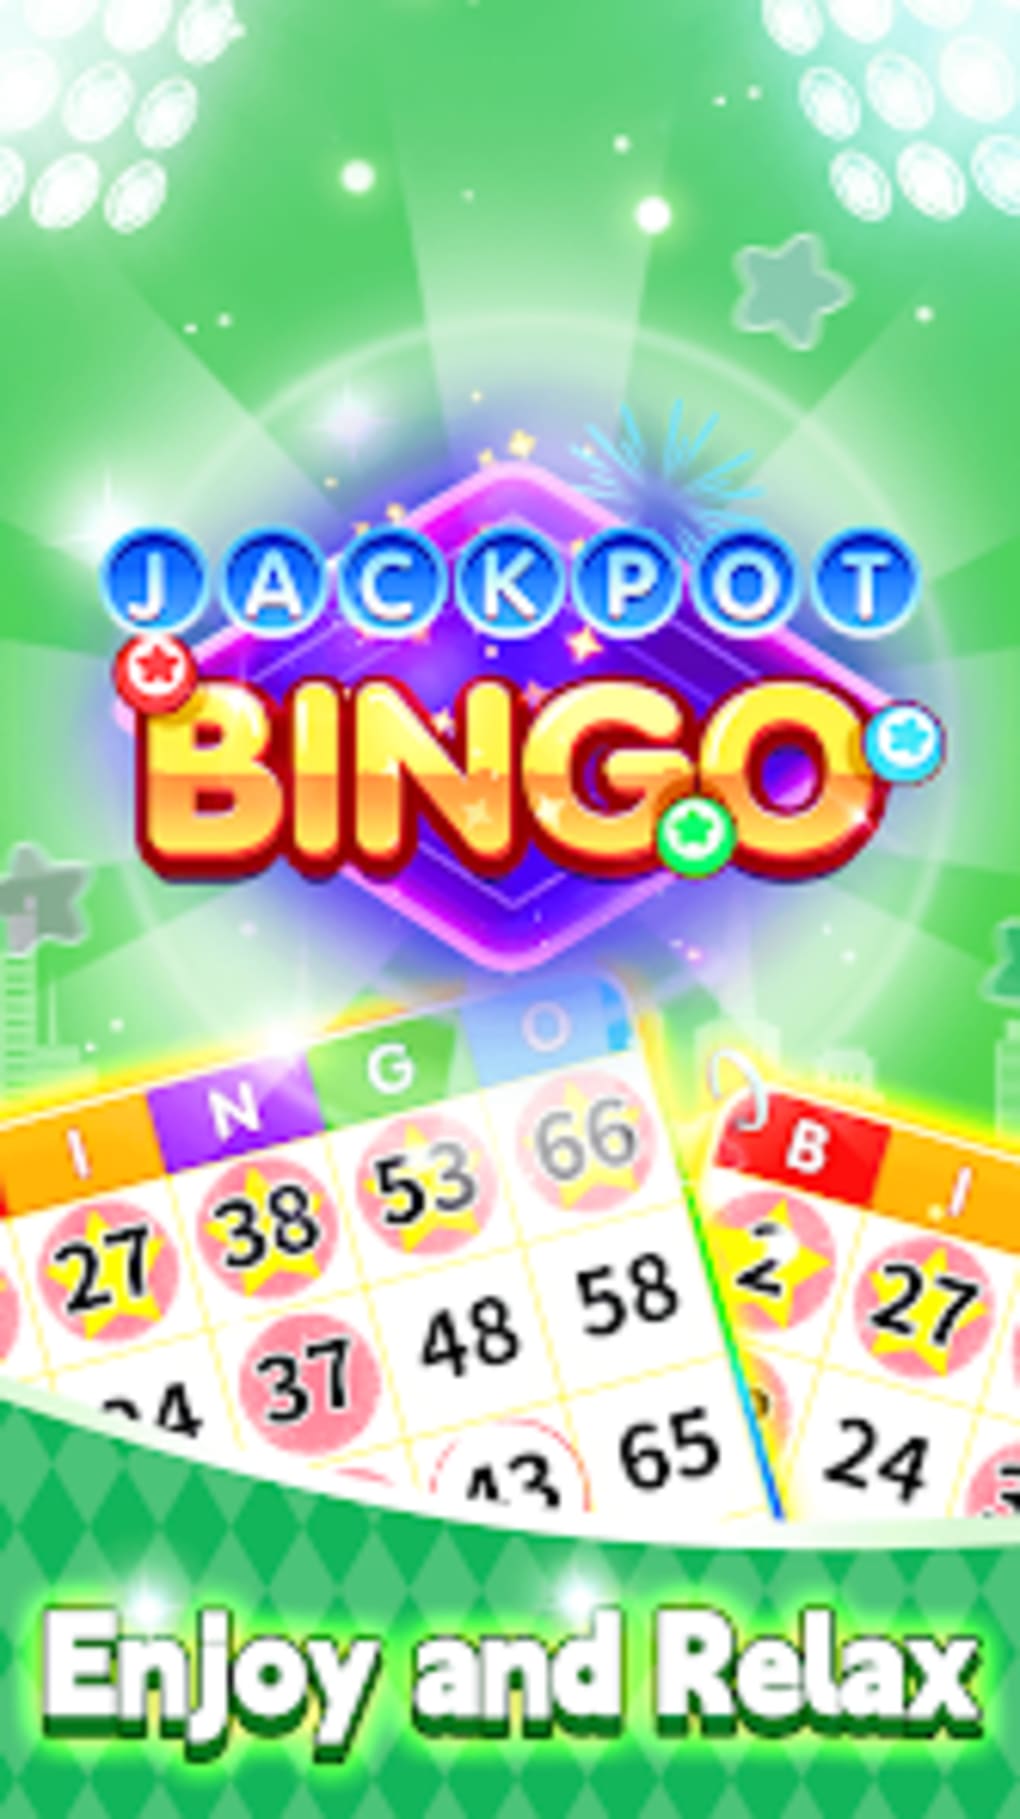 Bingo Jackpot en español